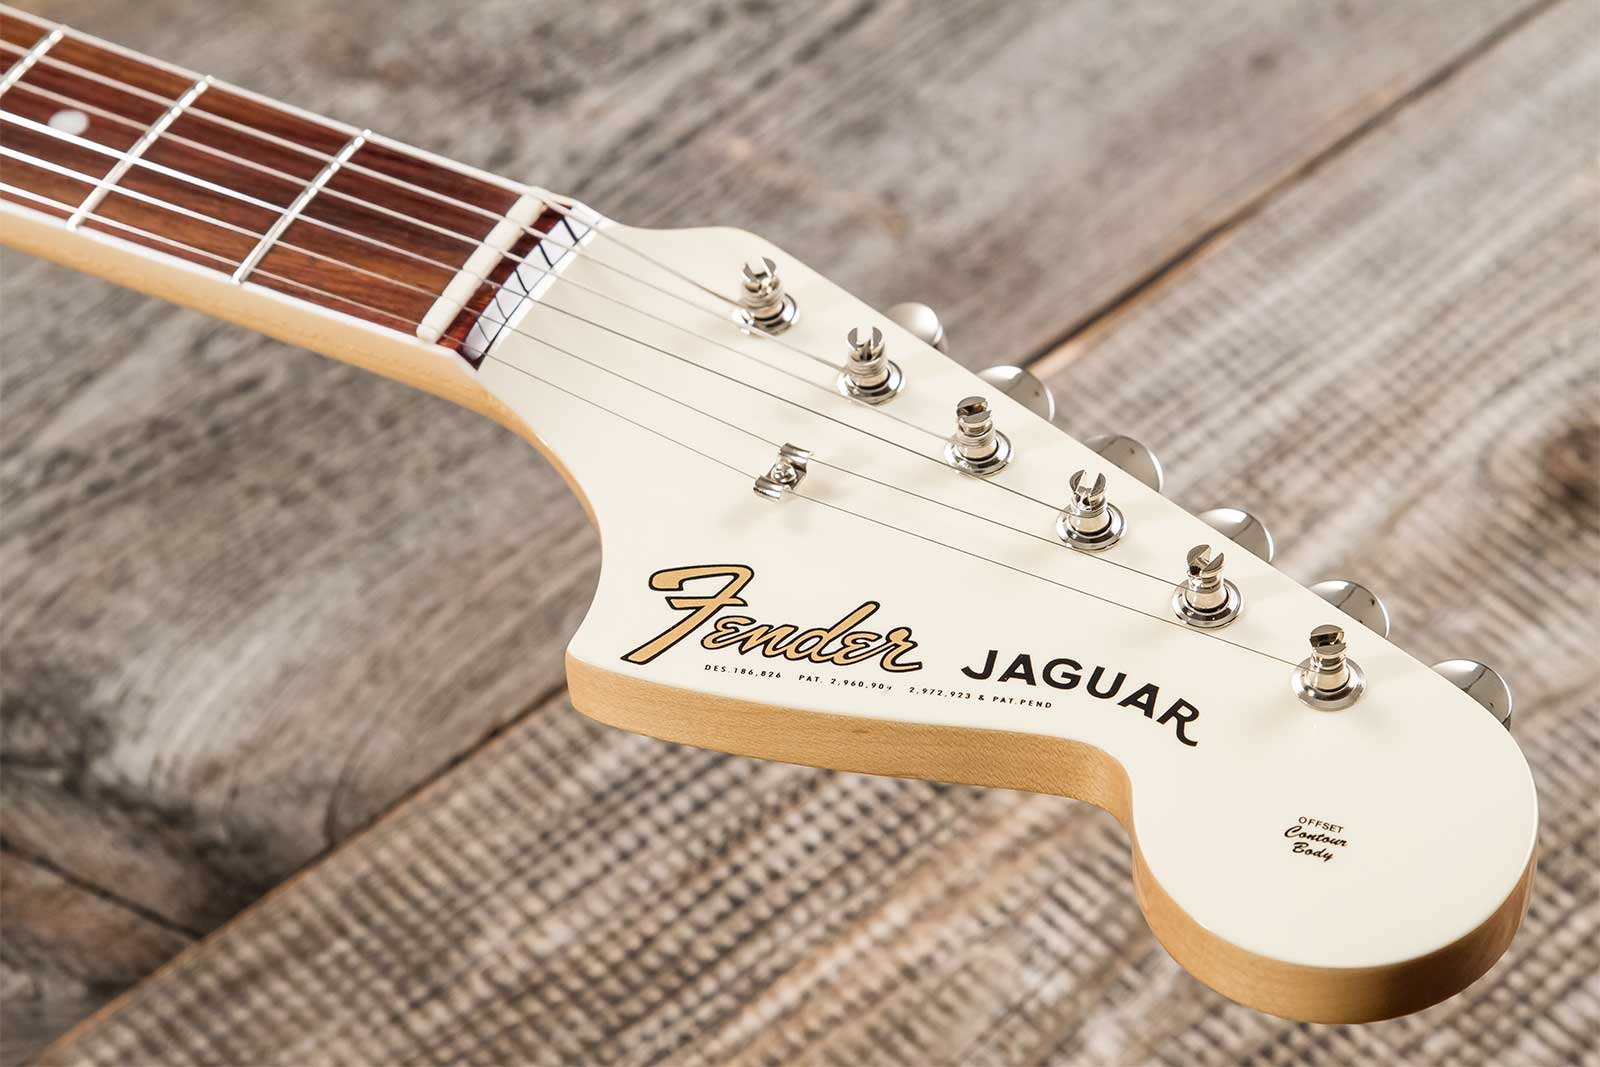 Fender Jaguar Traditional Ii 60s Japan 2s Trem Rw - Olympic White - Retro rock electric guitar - Variation 10